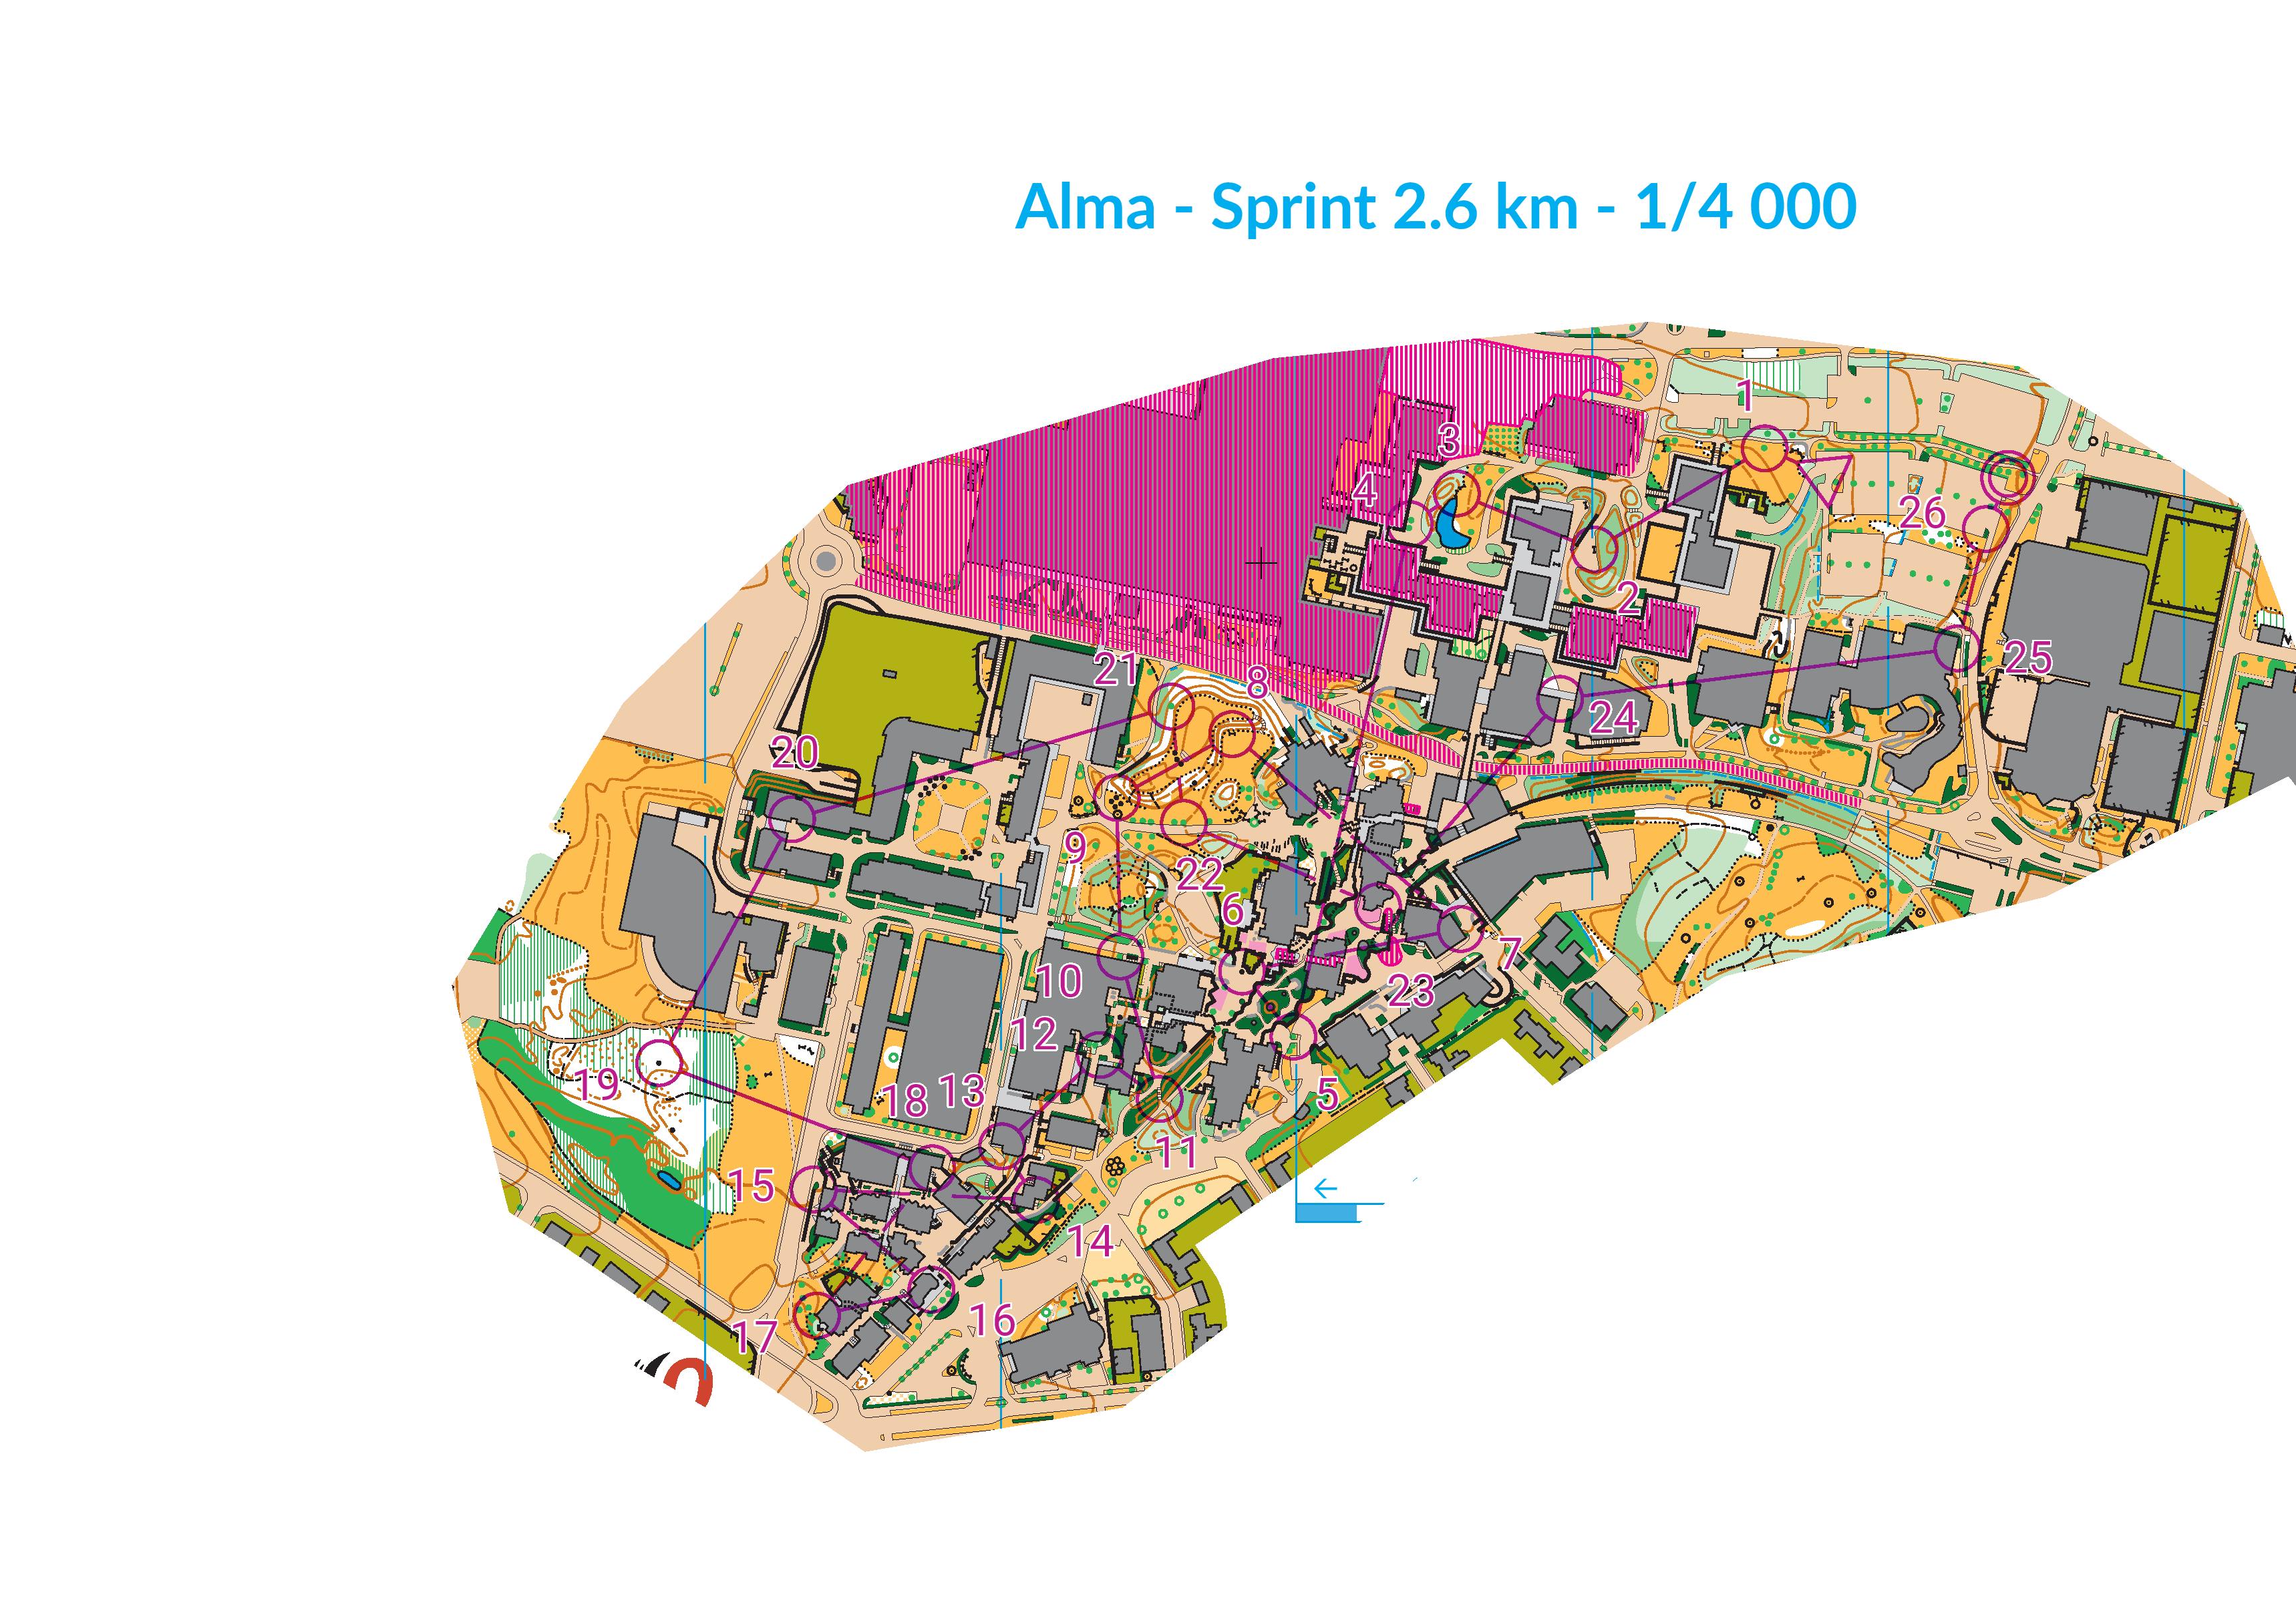 Sprint Alma (27-01-2021)